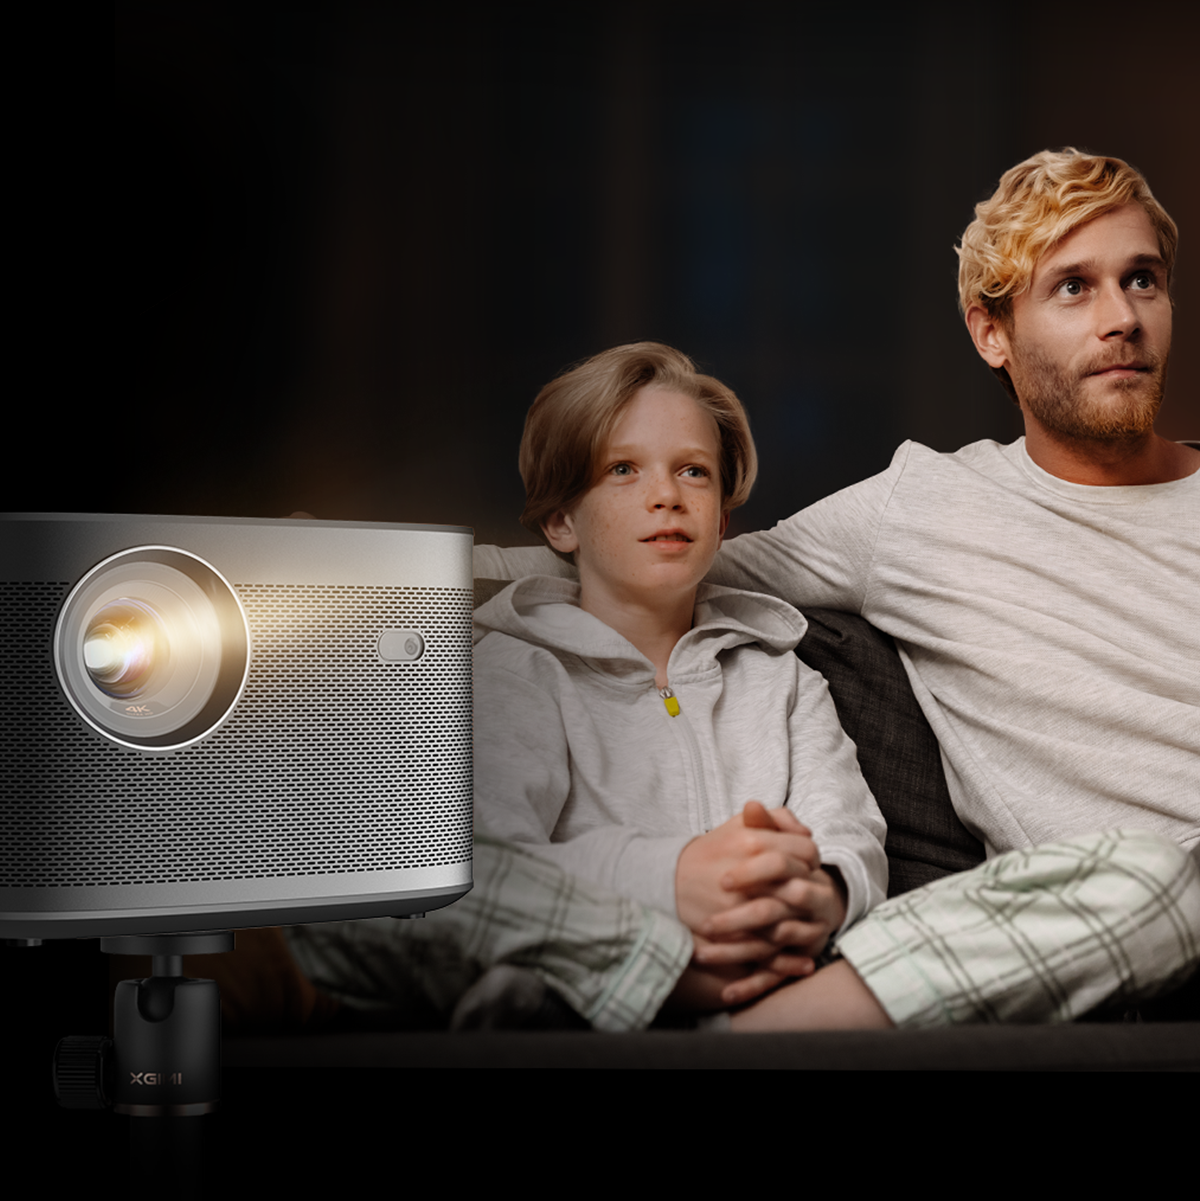 XGIMI'S Horizon Pro 4K Projector Wins Renowned European A/V Award